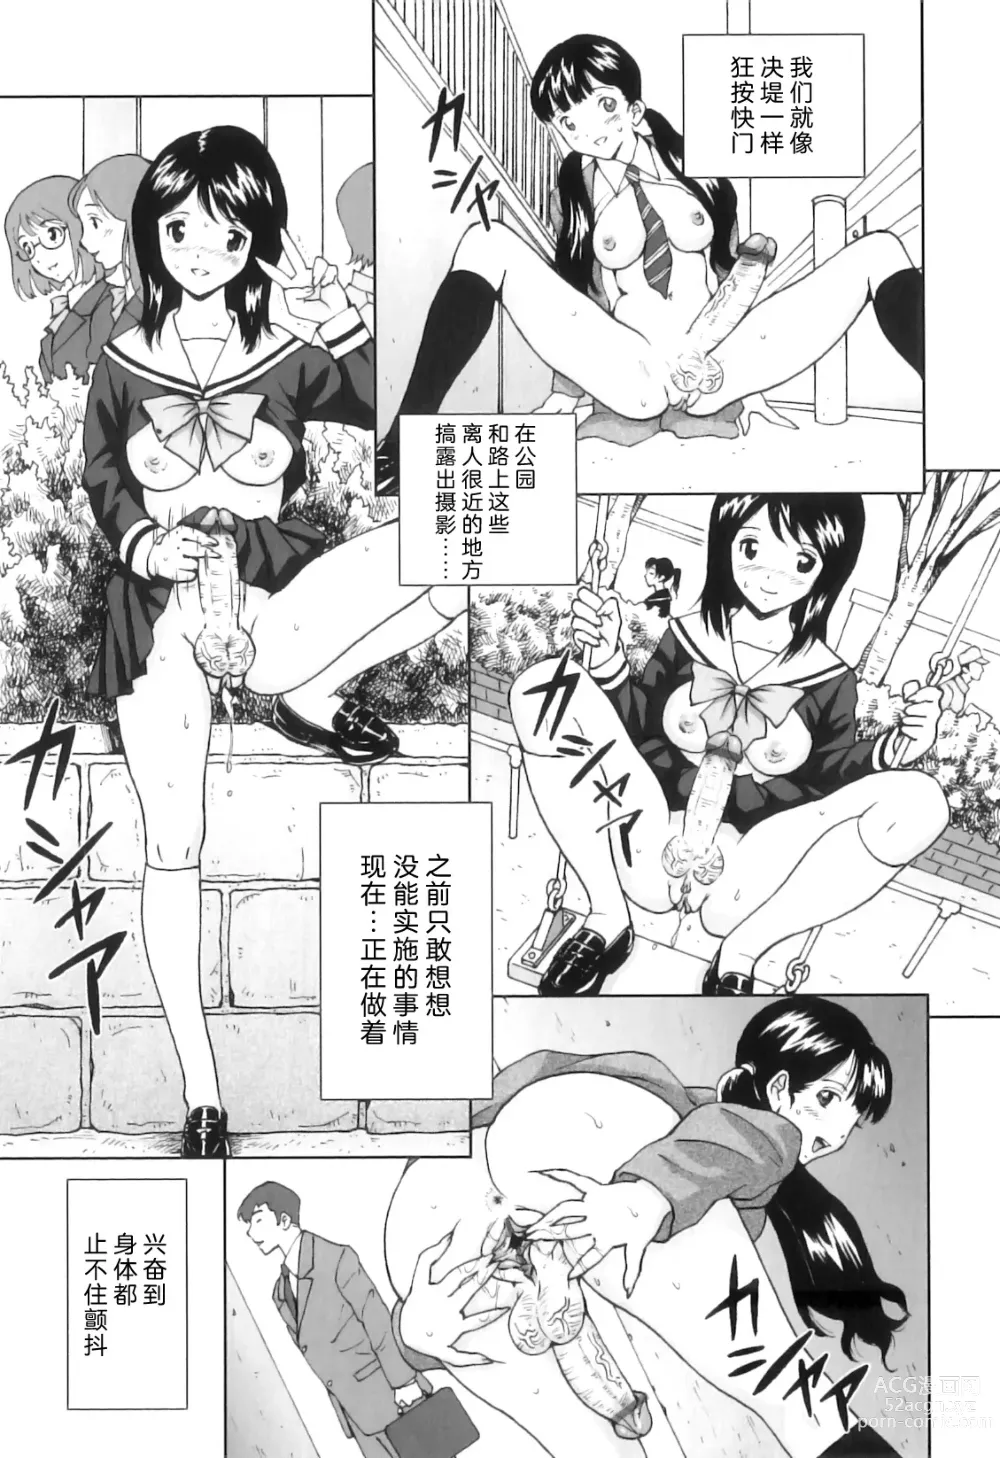 Page 24 of manga FutaSuki!